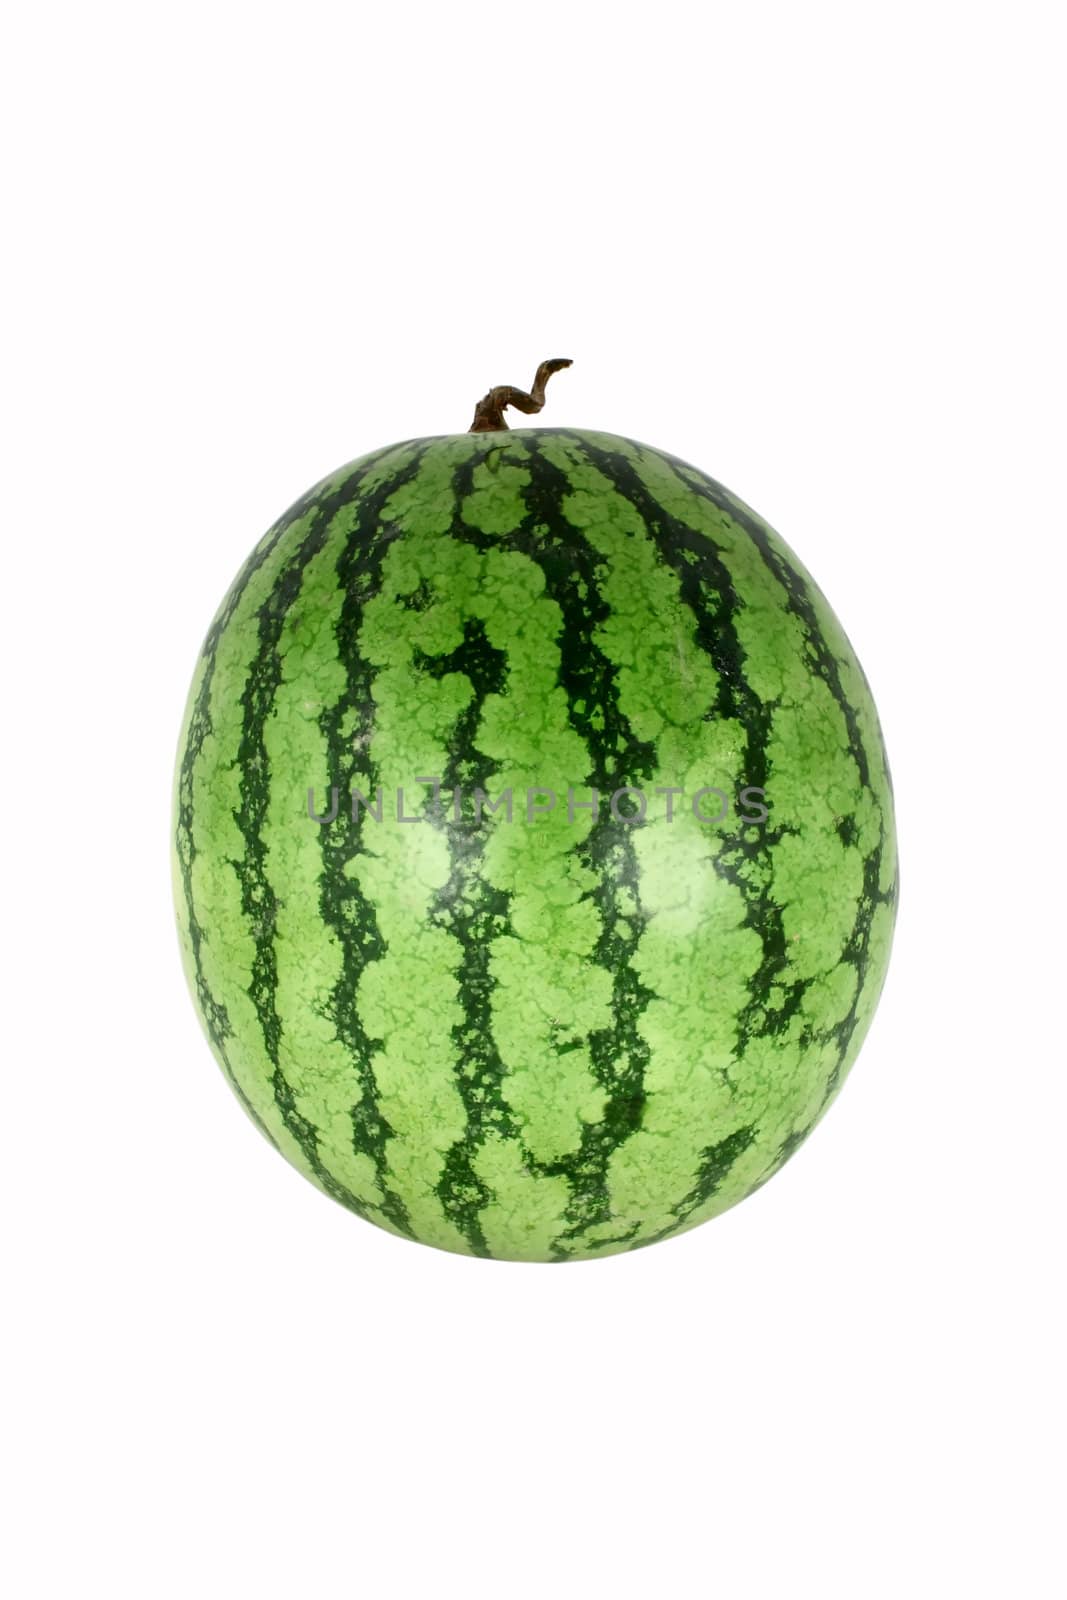 ripe green striped watermelon, isolated